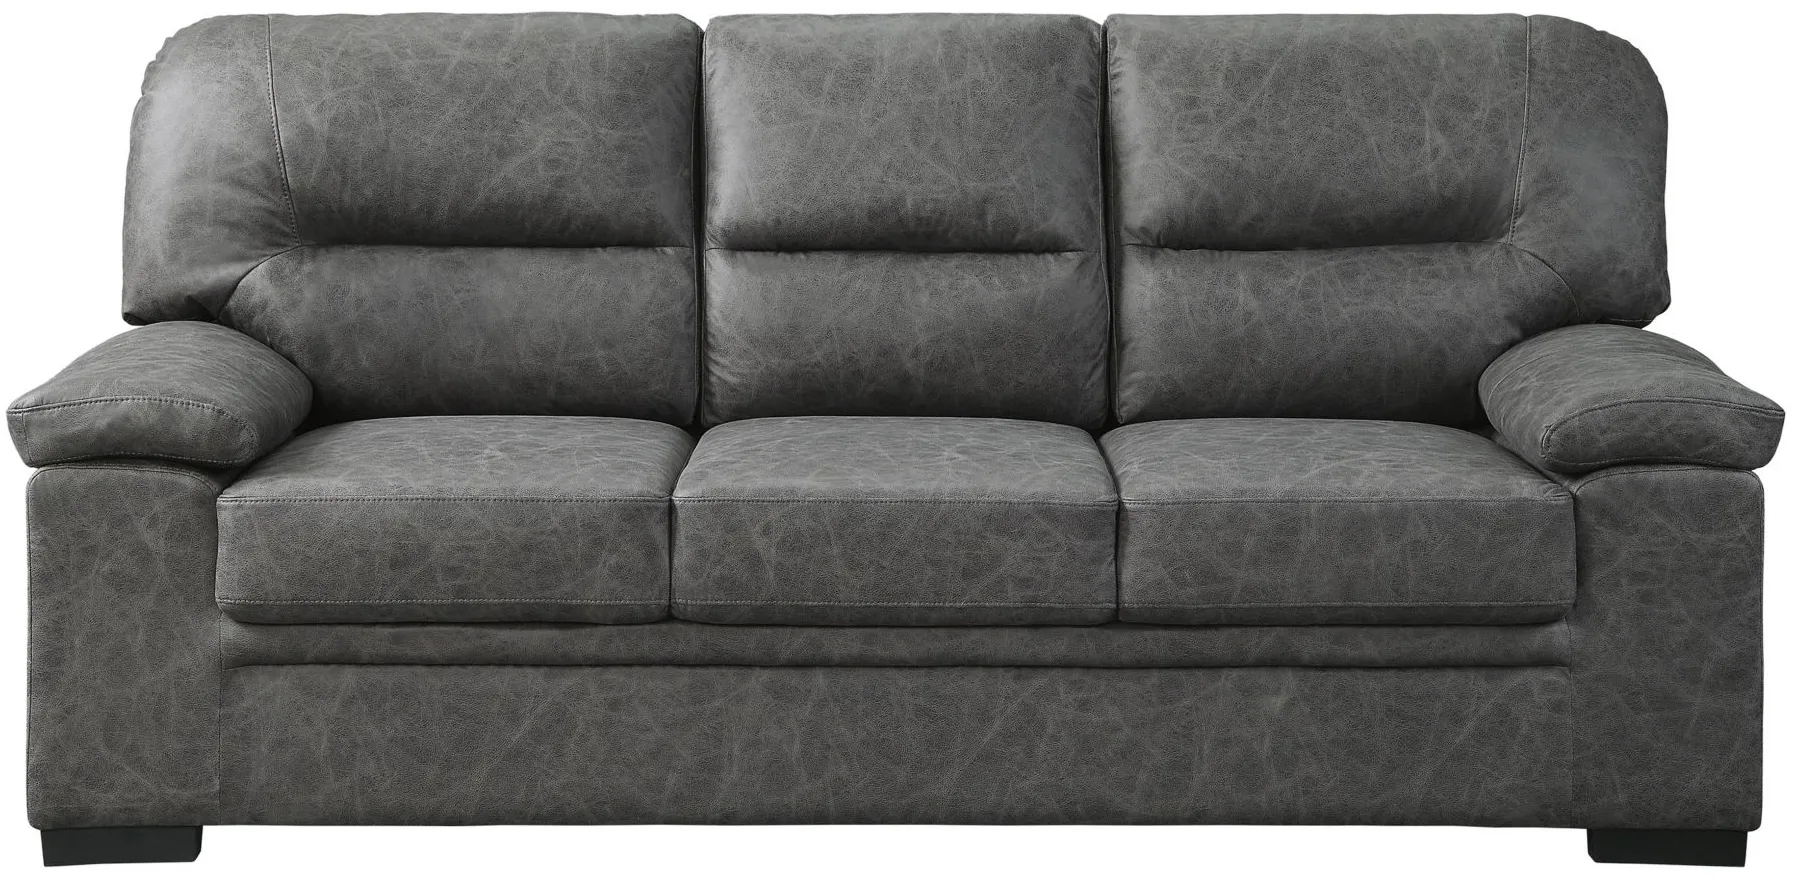 Mendon Sofa in Dark Gray by Homelegance